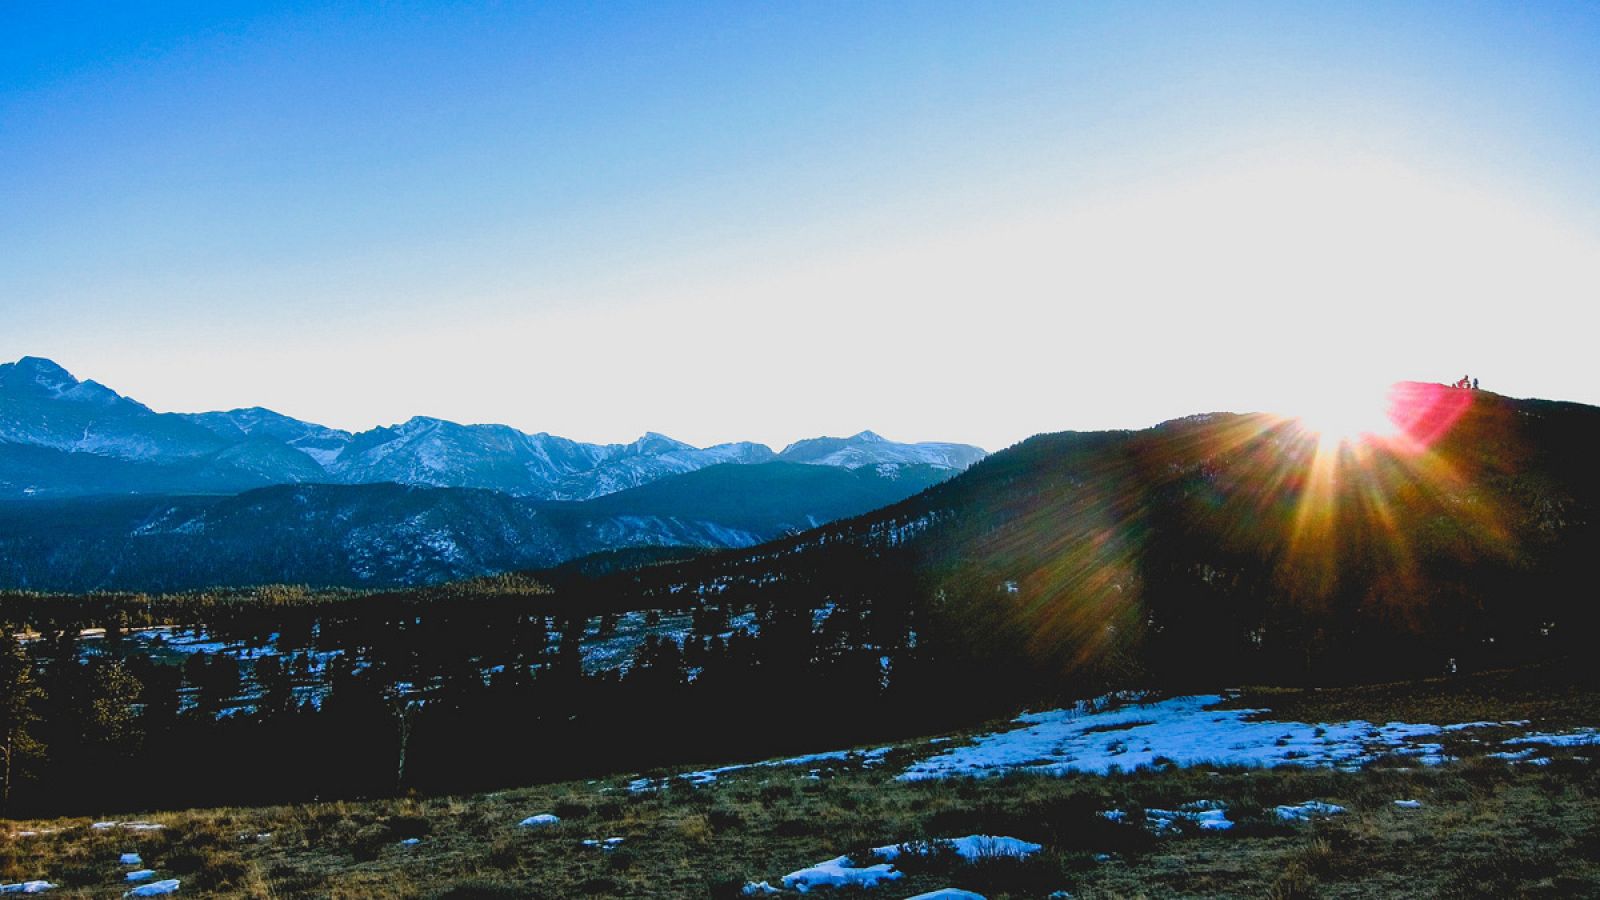 Un paisaje de alta montaña en Colorado, Estados Unidos